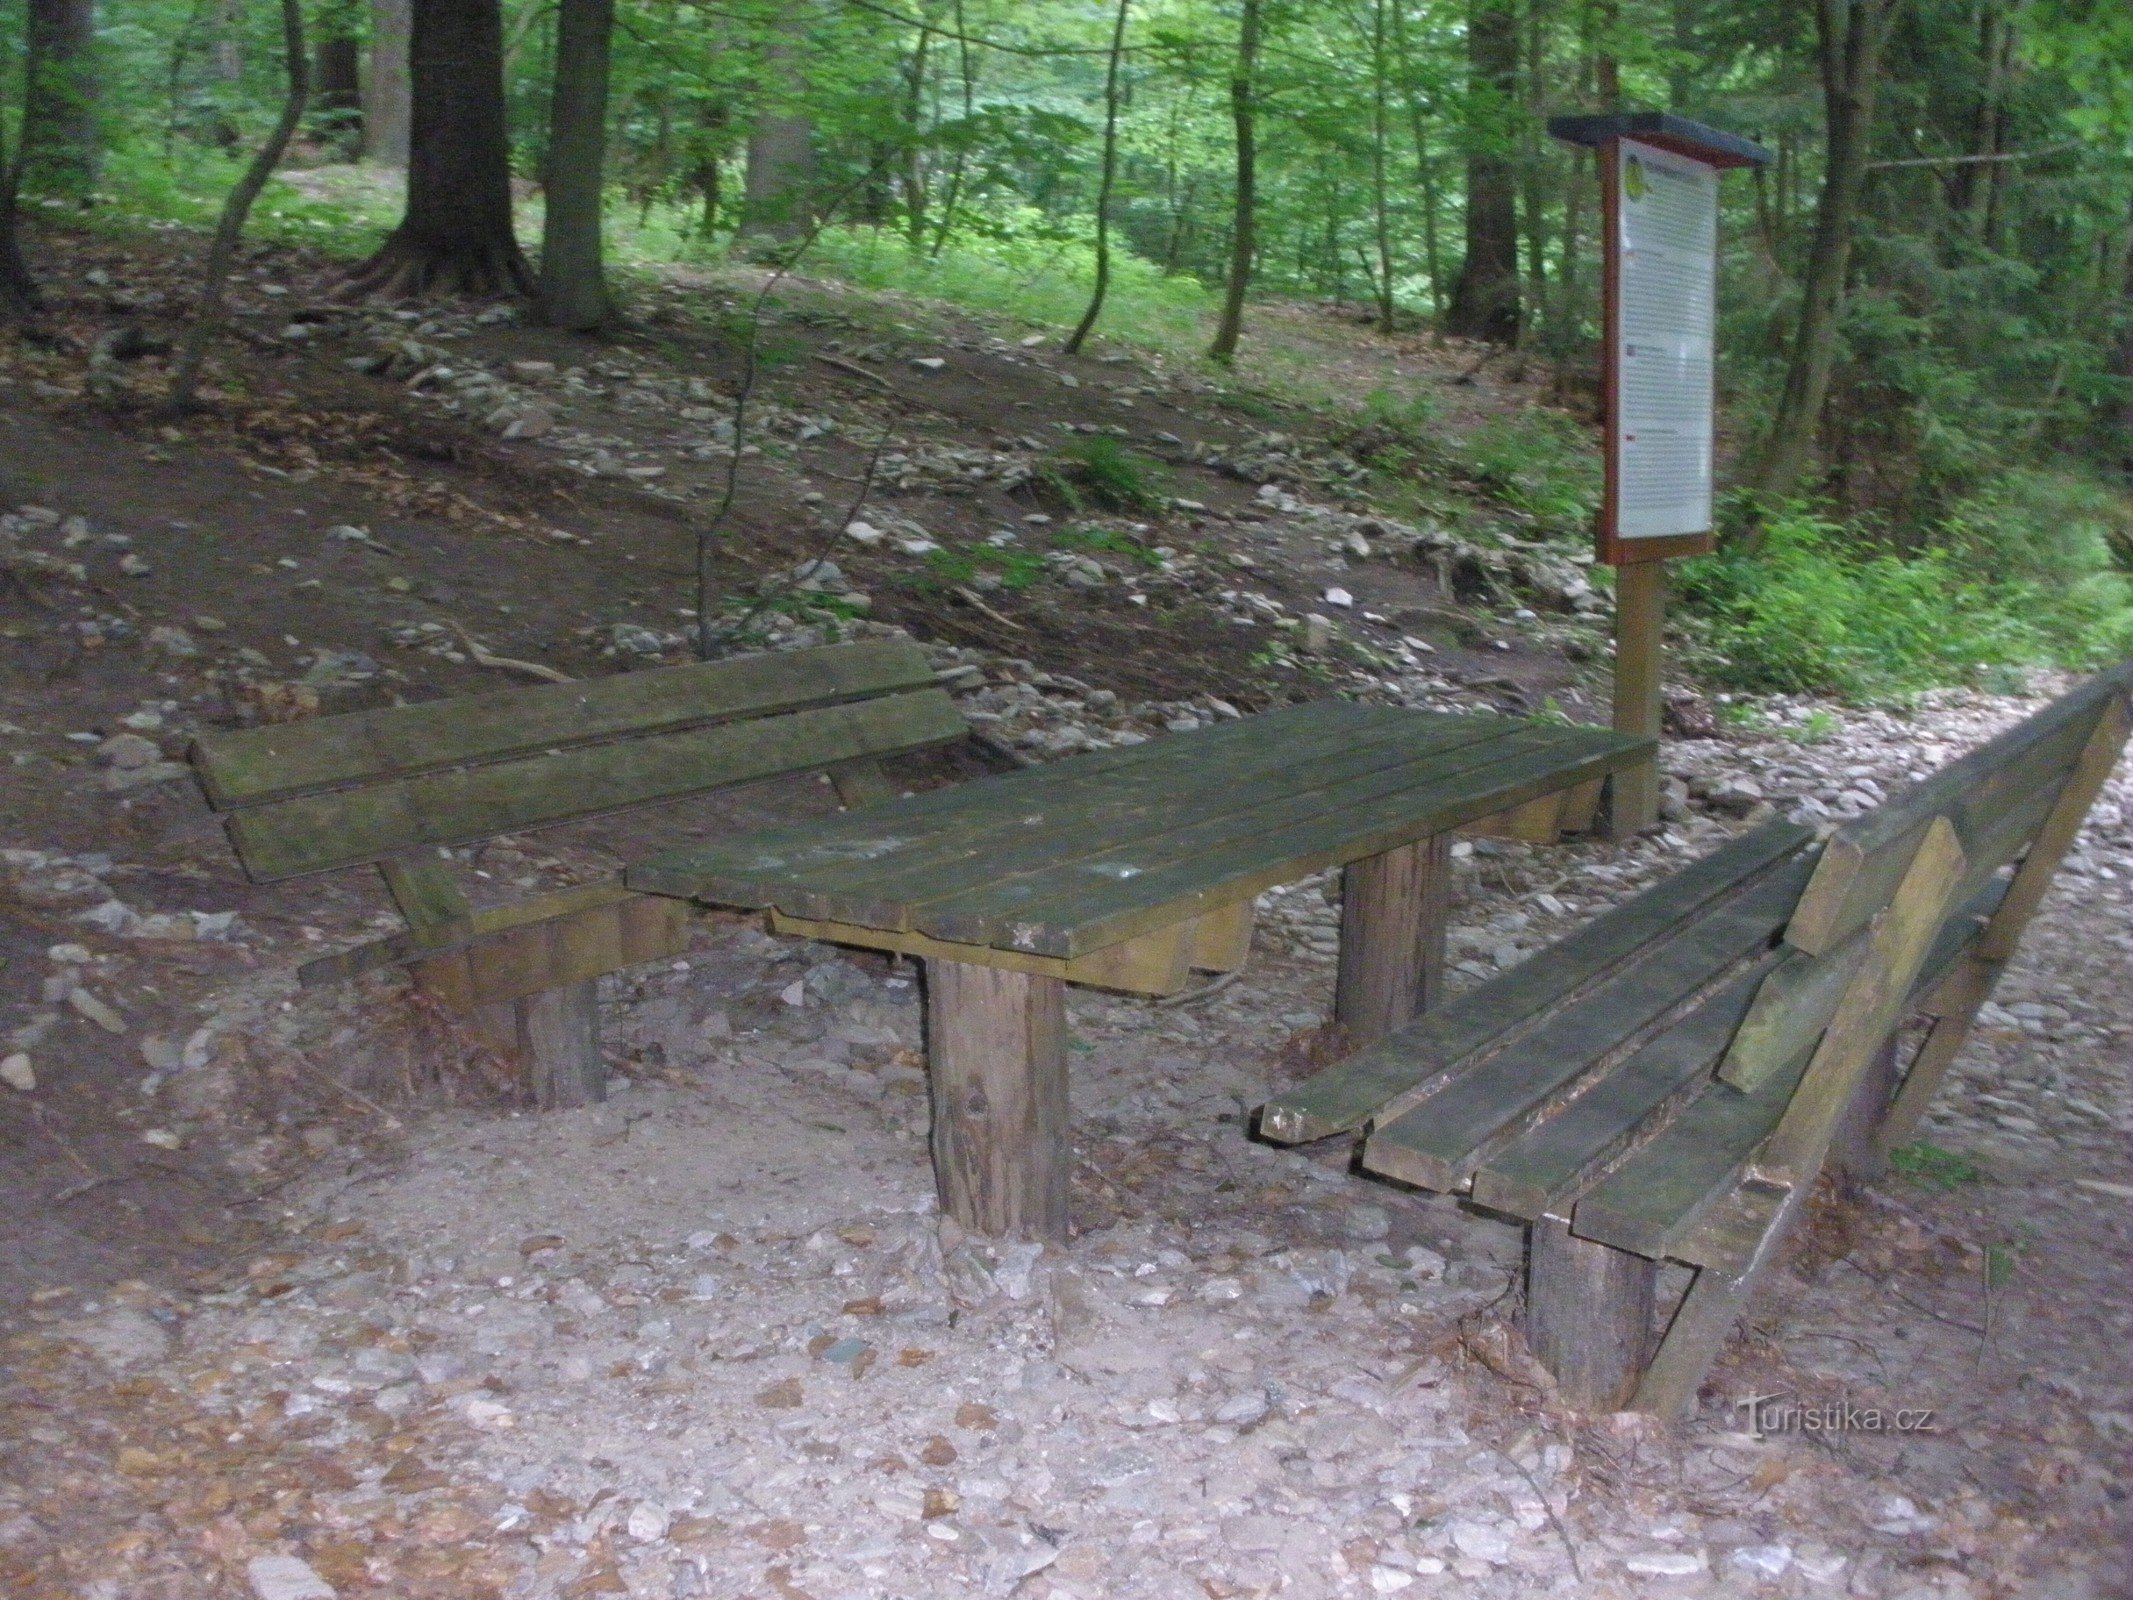 Rest area at the Janské brook